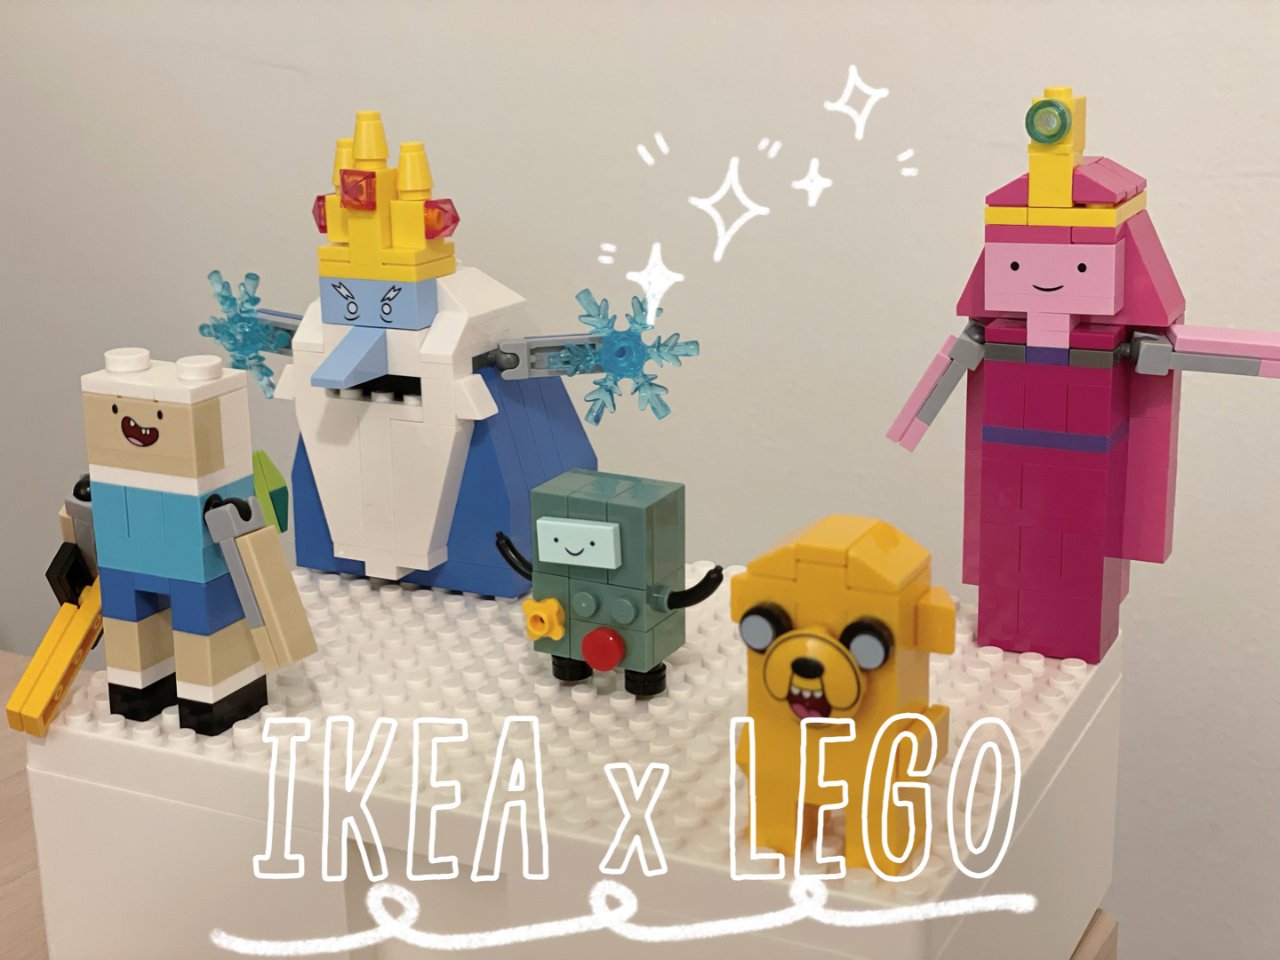 IKEA x LEGO 宜家乐高联名收纳...